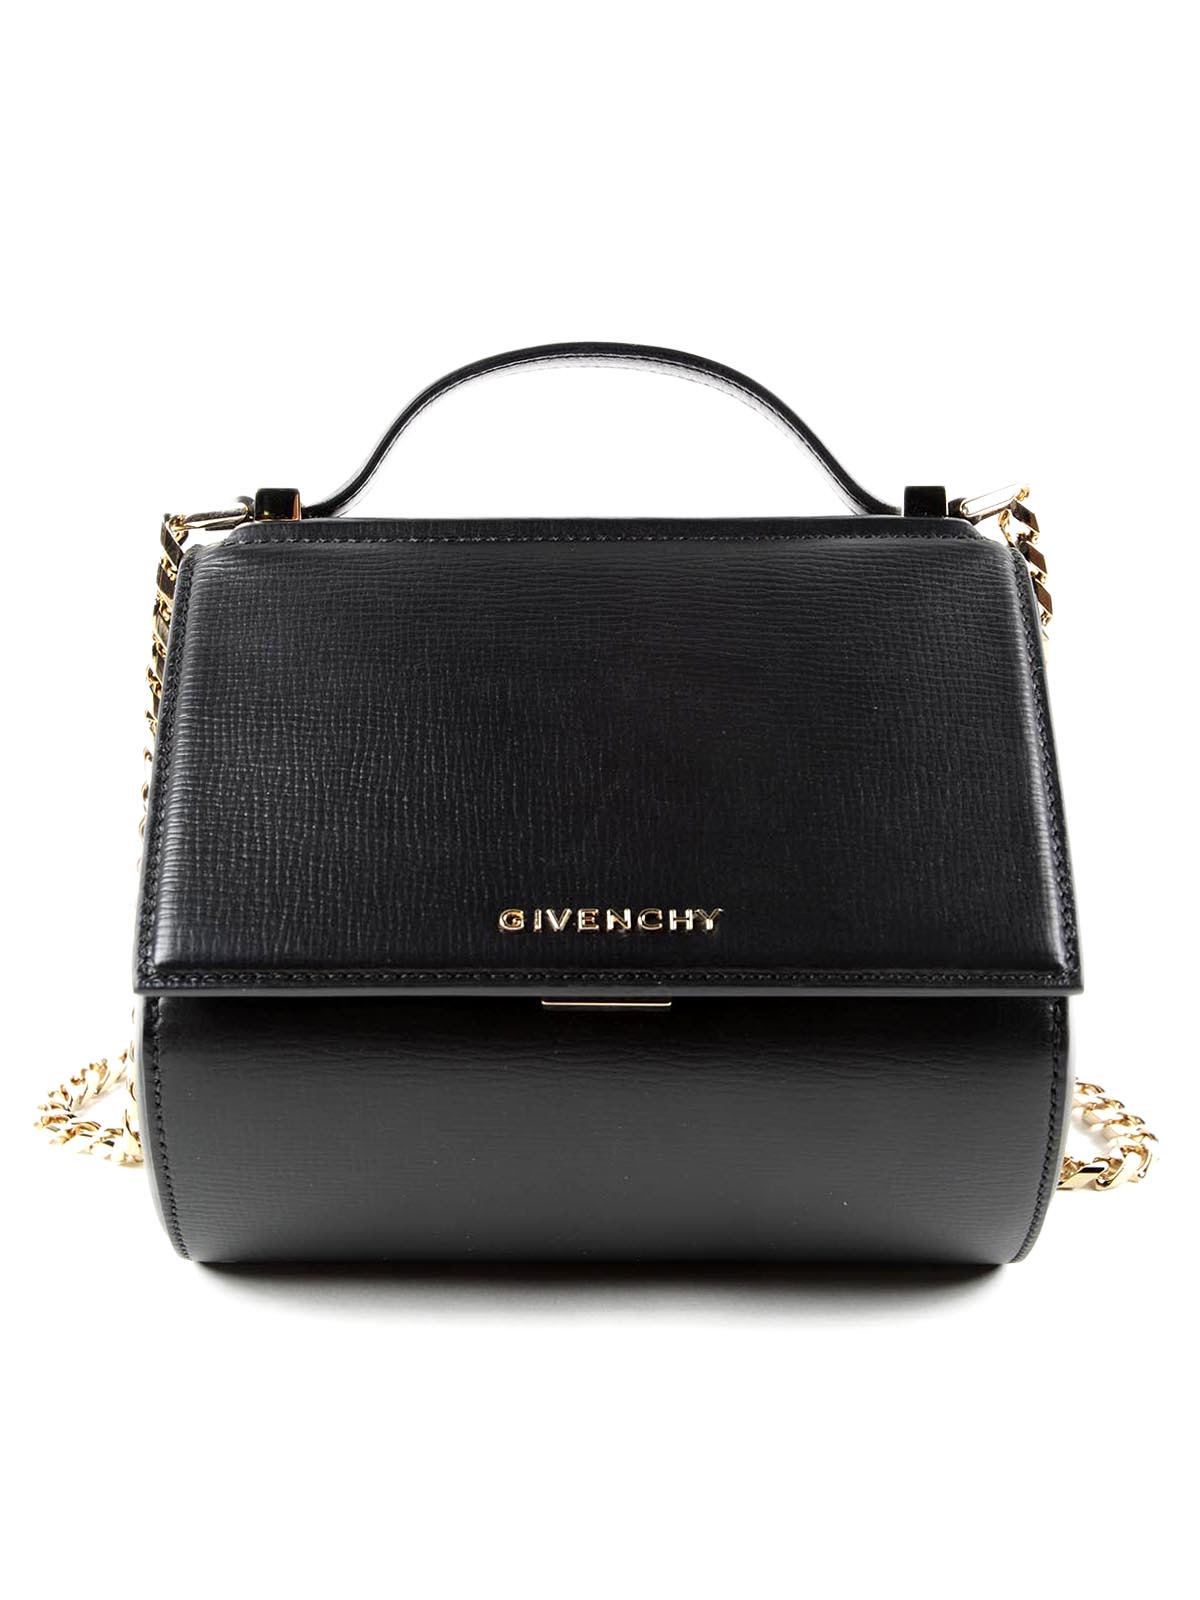 GIVENCHY 'Mini Pandora Box - Palma' Leather Shoulder Bag - Black | ModeSens